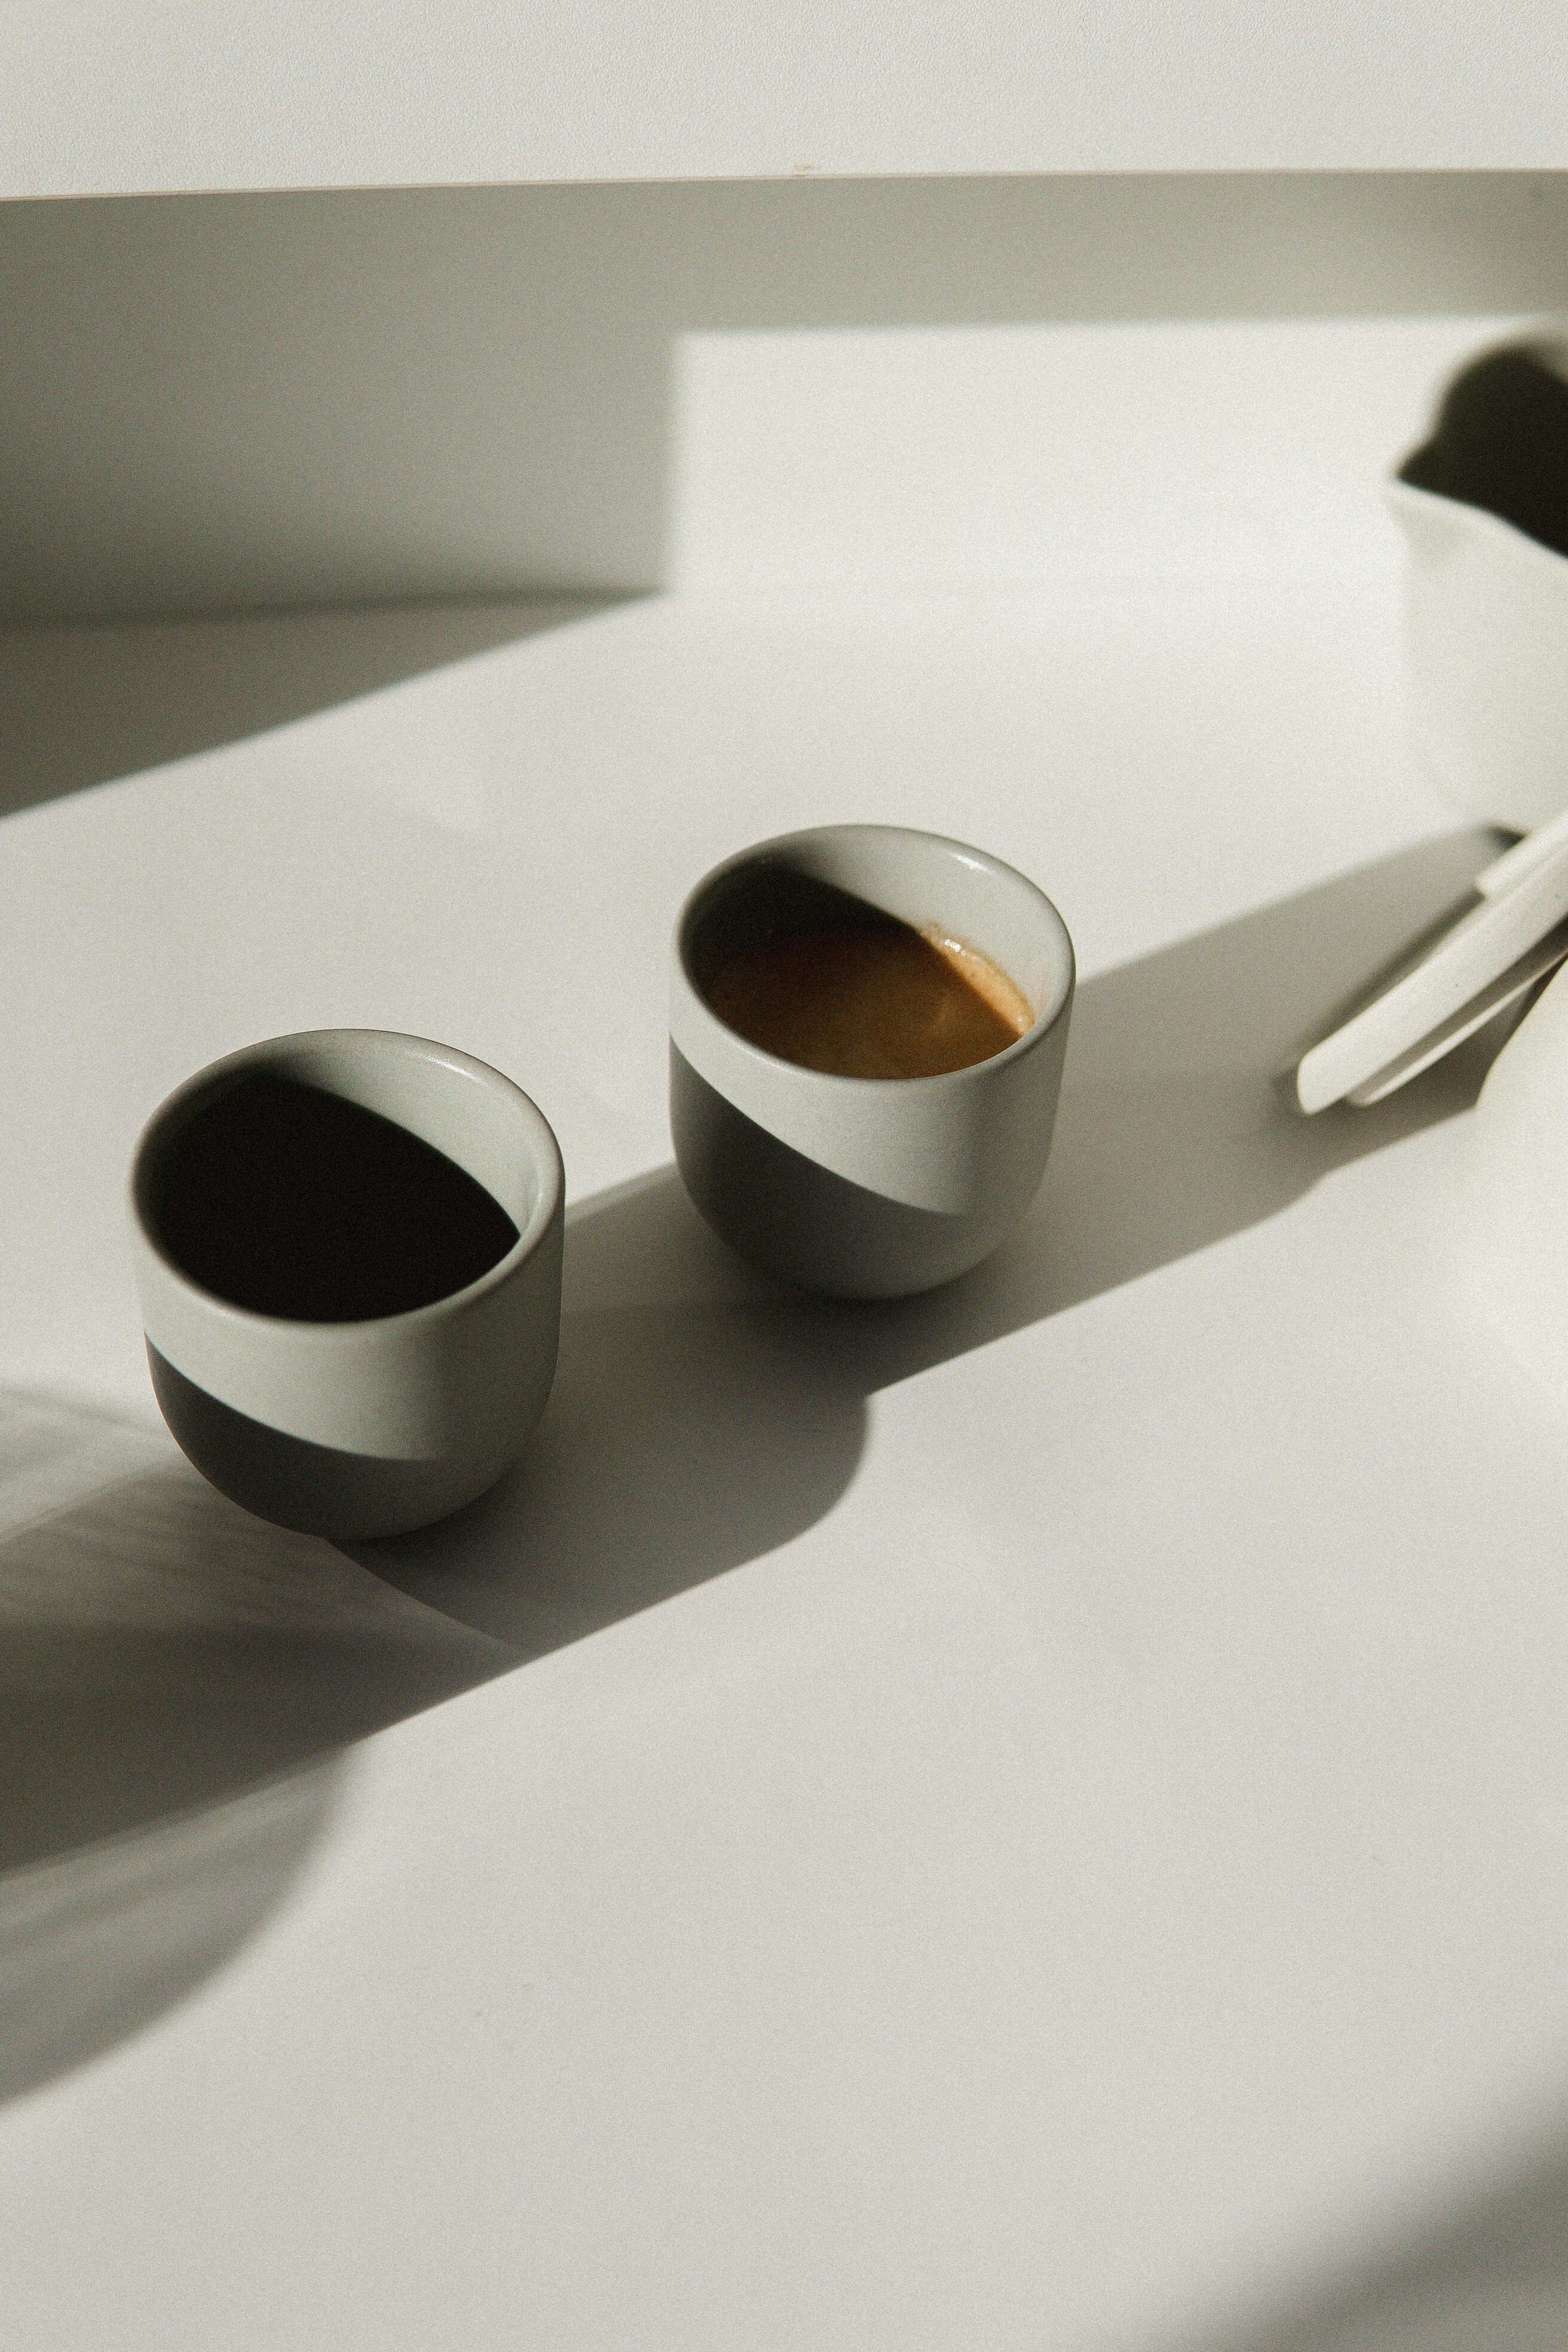 2 white ceramic mugs on white table